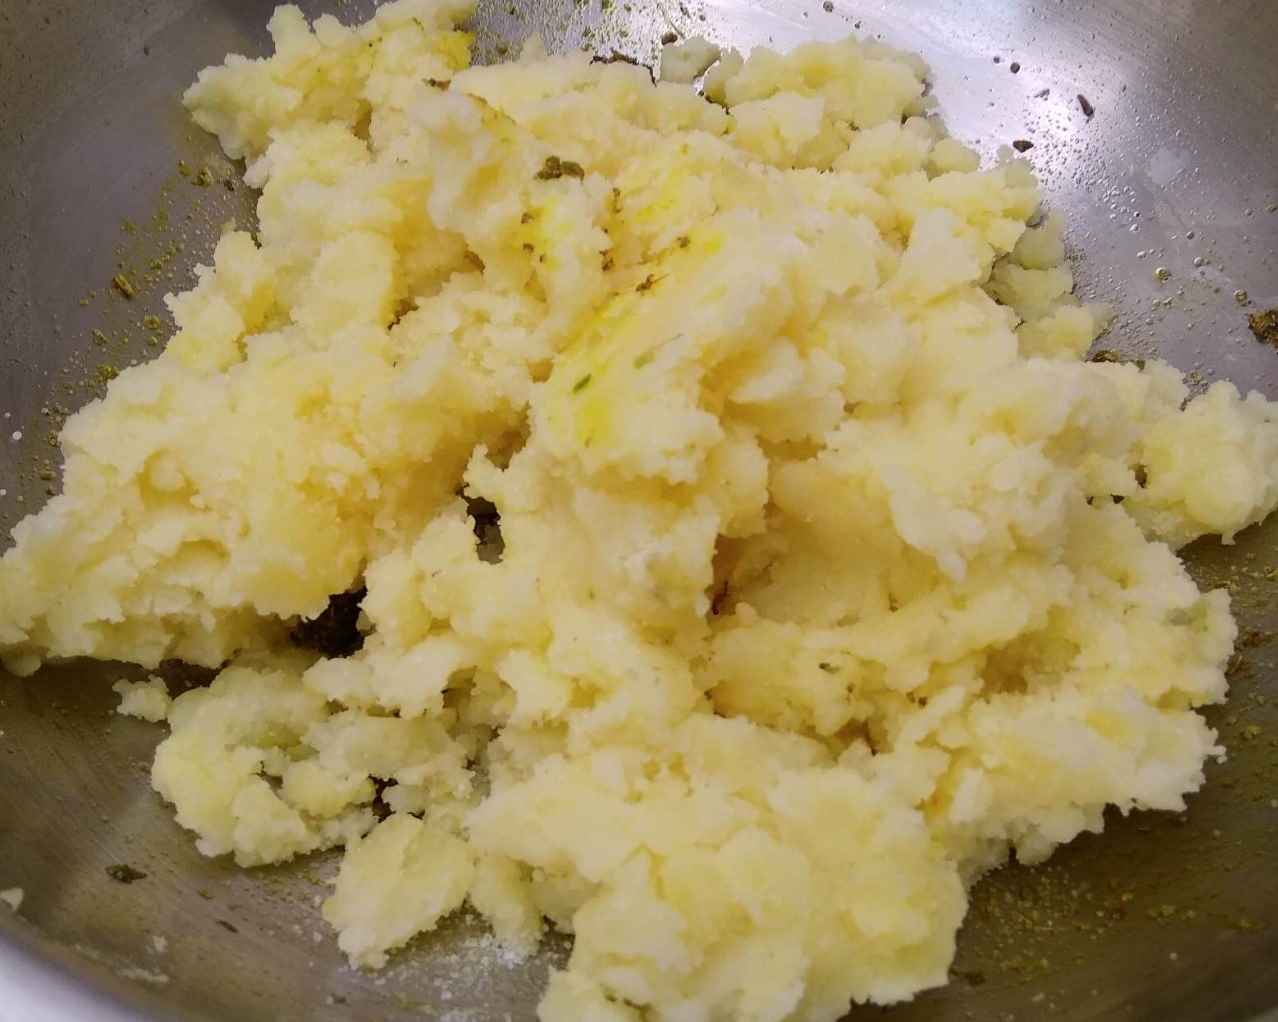 How to make Potato stuffing